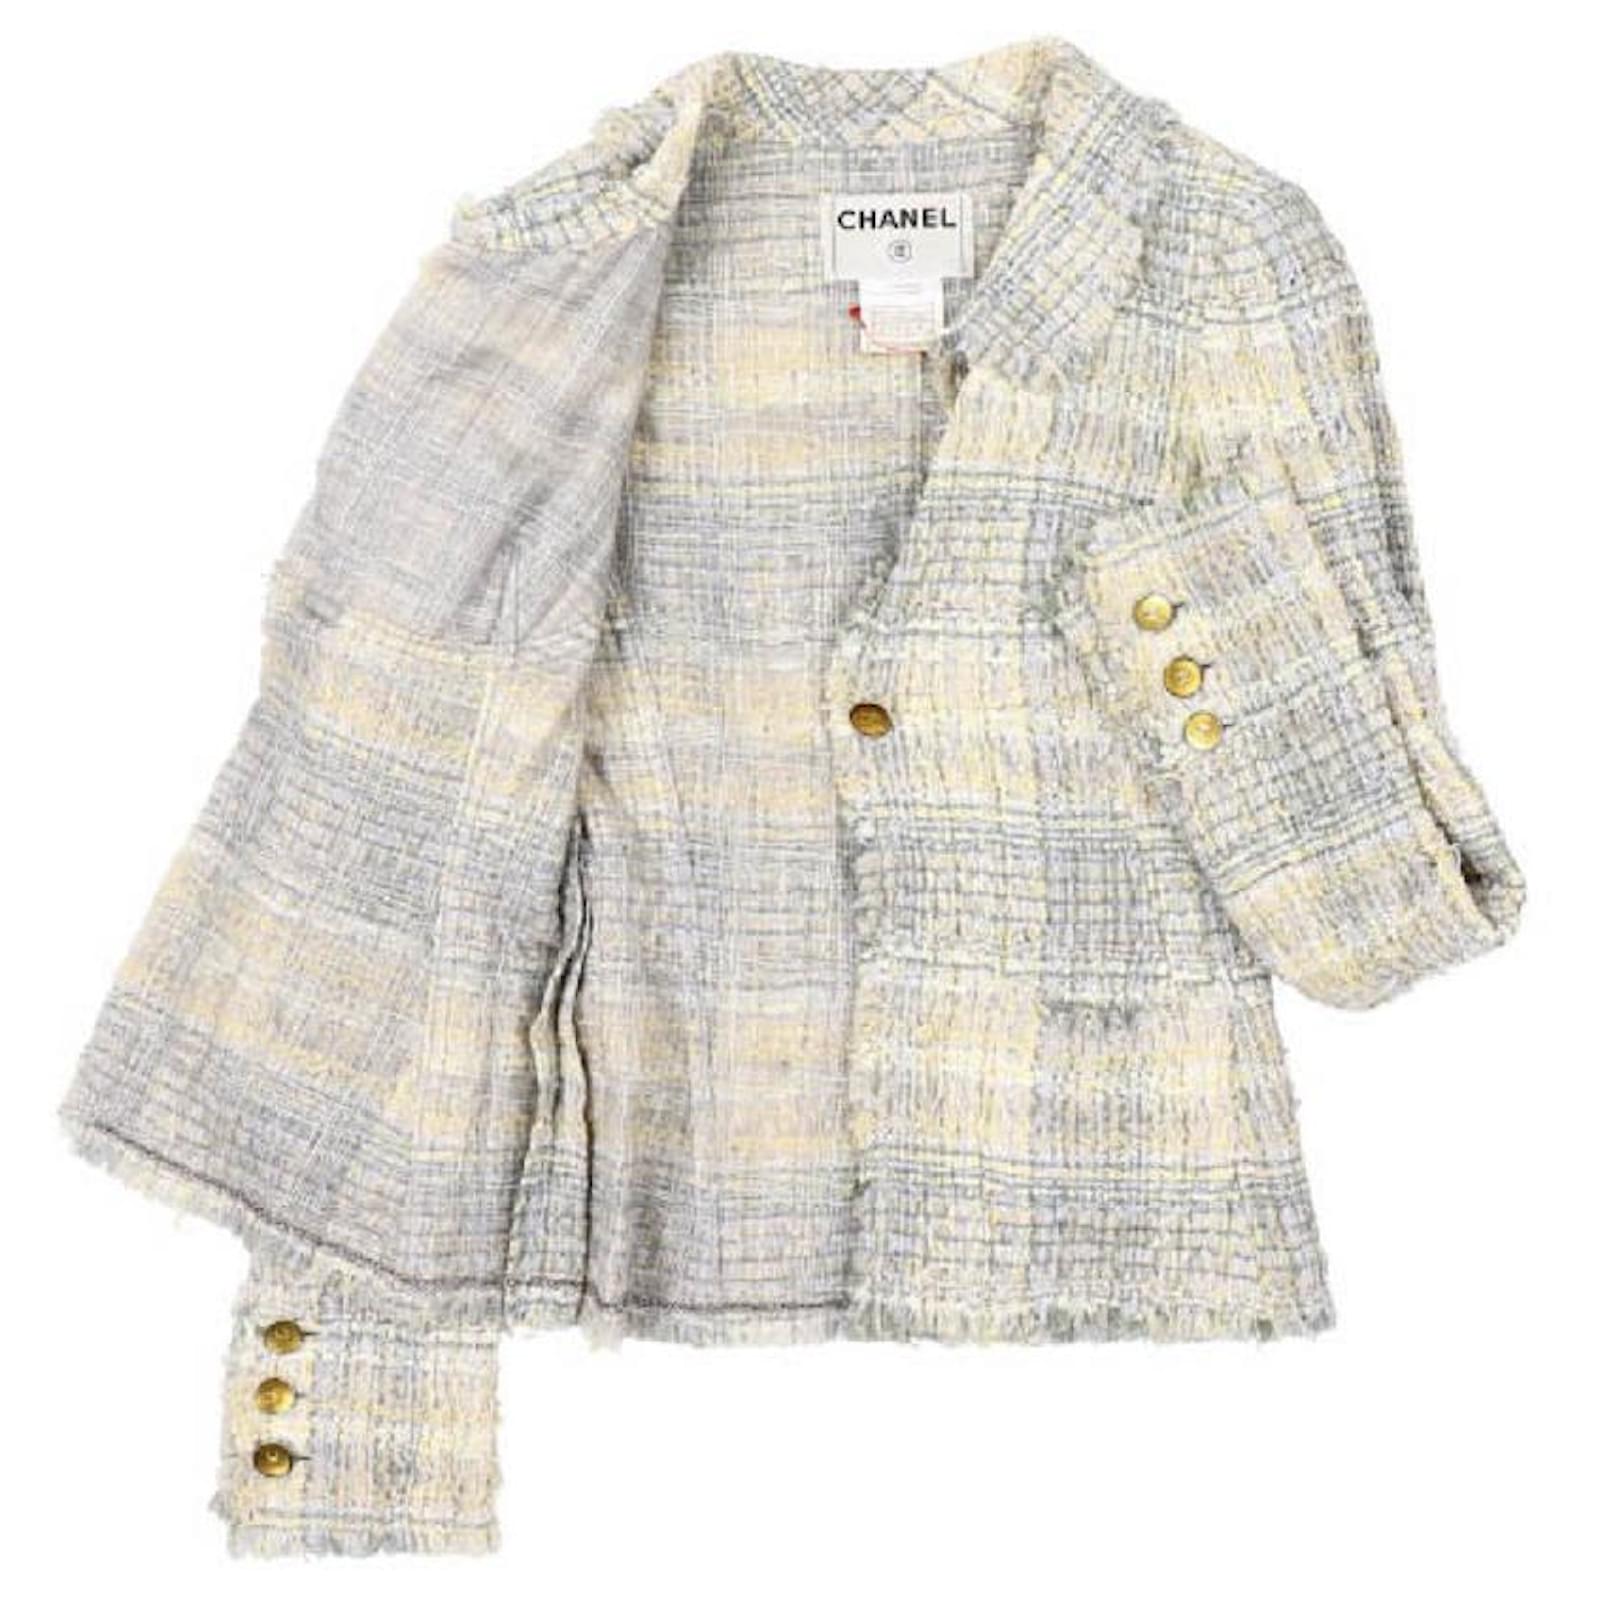 Bootleg Chanel denim jacket for Women, Women's Fashion, Coats